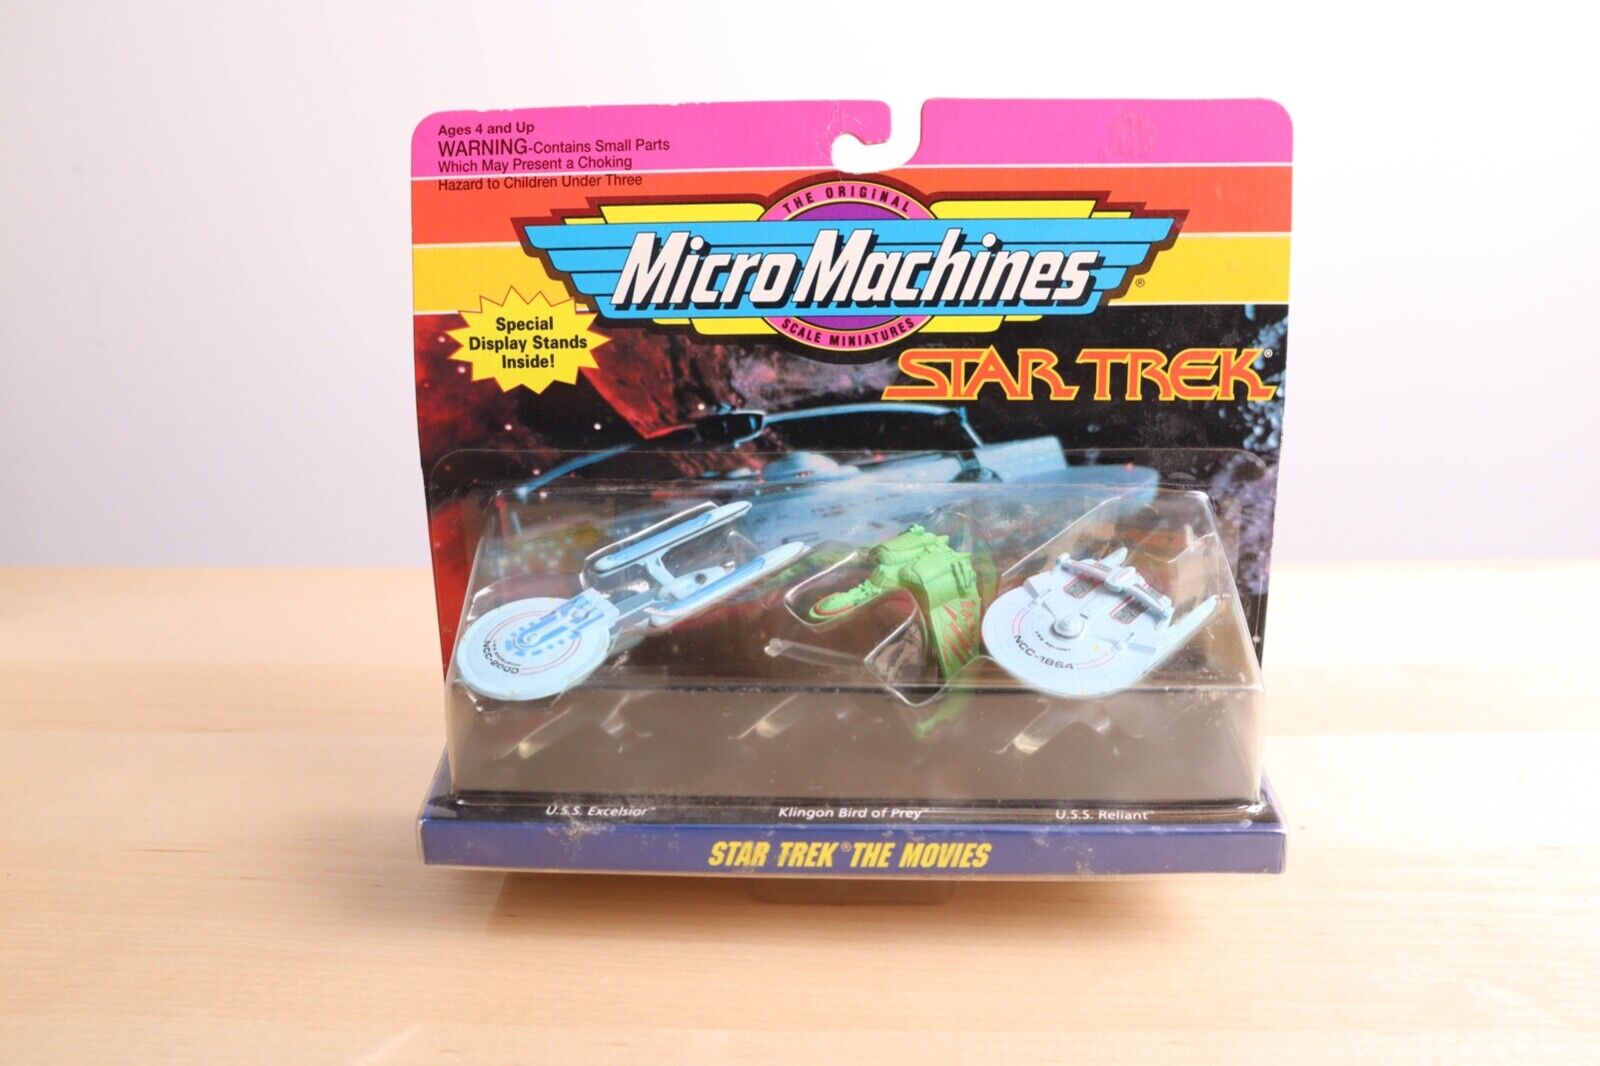 Micro Machines Star Trek: The Movies SEALED - 1993